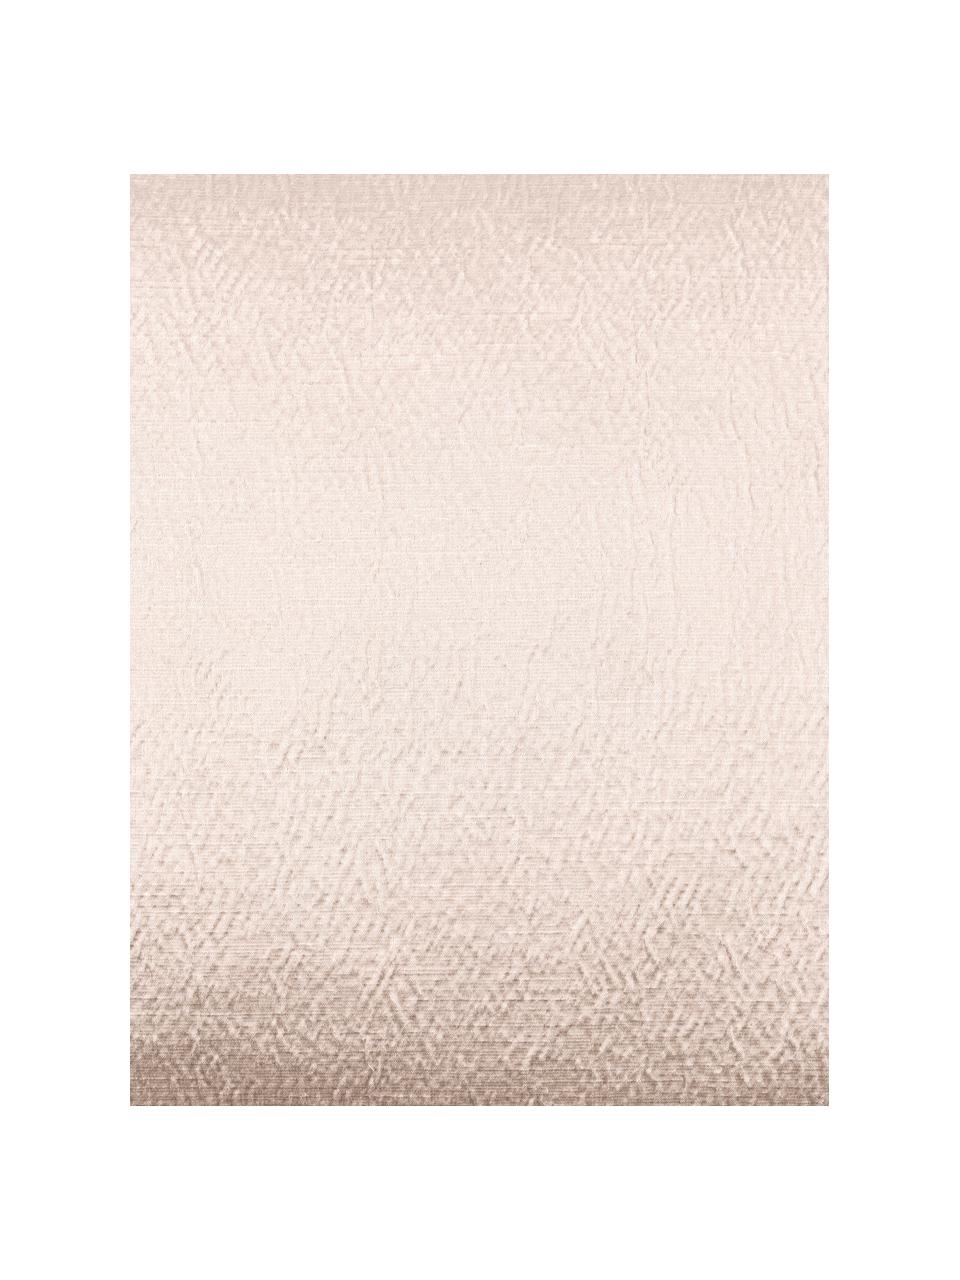 Glanzende kussenhoes Nilay in beige, 56% katoen, 44% polyester, Beige, 40 x 40 cm